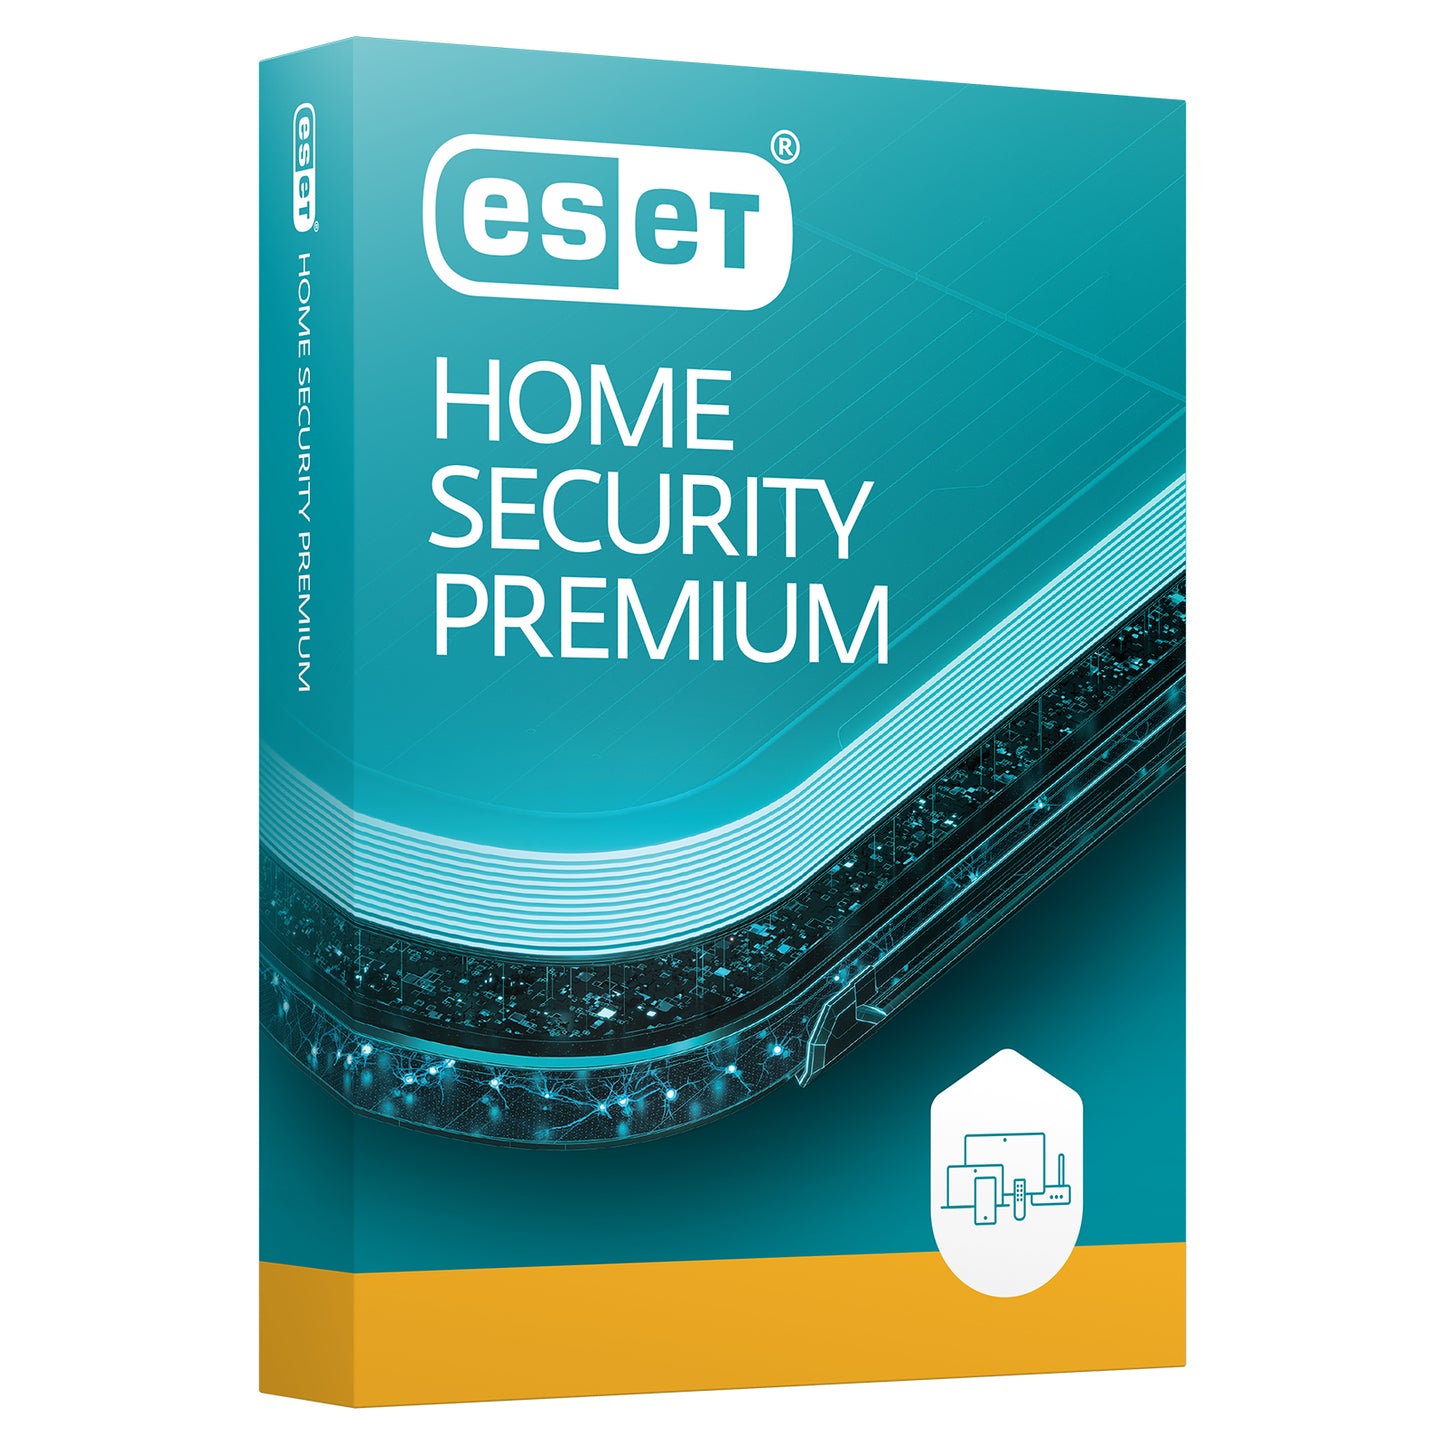 ESET Home Security Premium, 1 Device, 1 Year